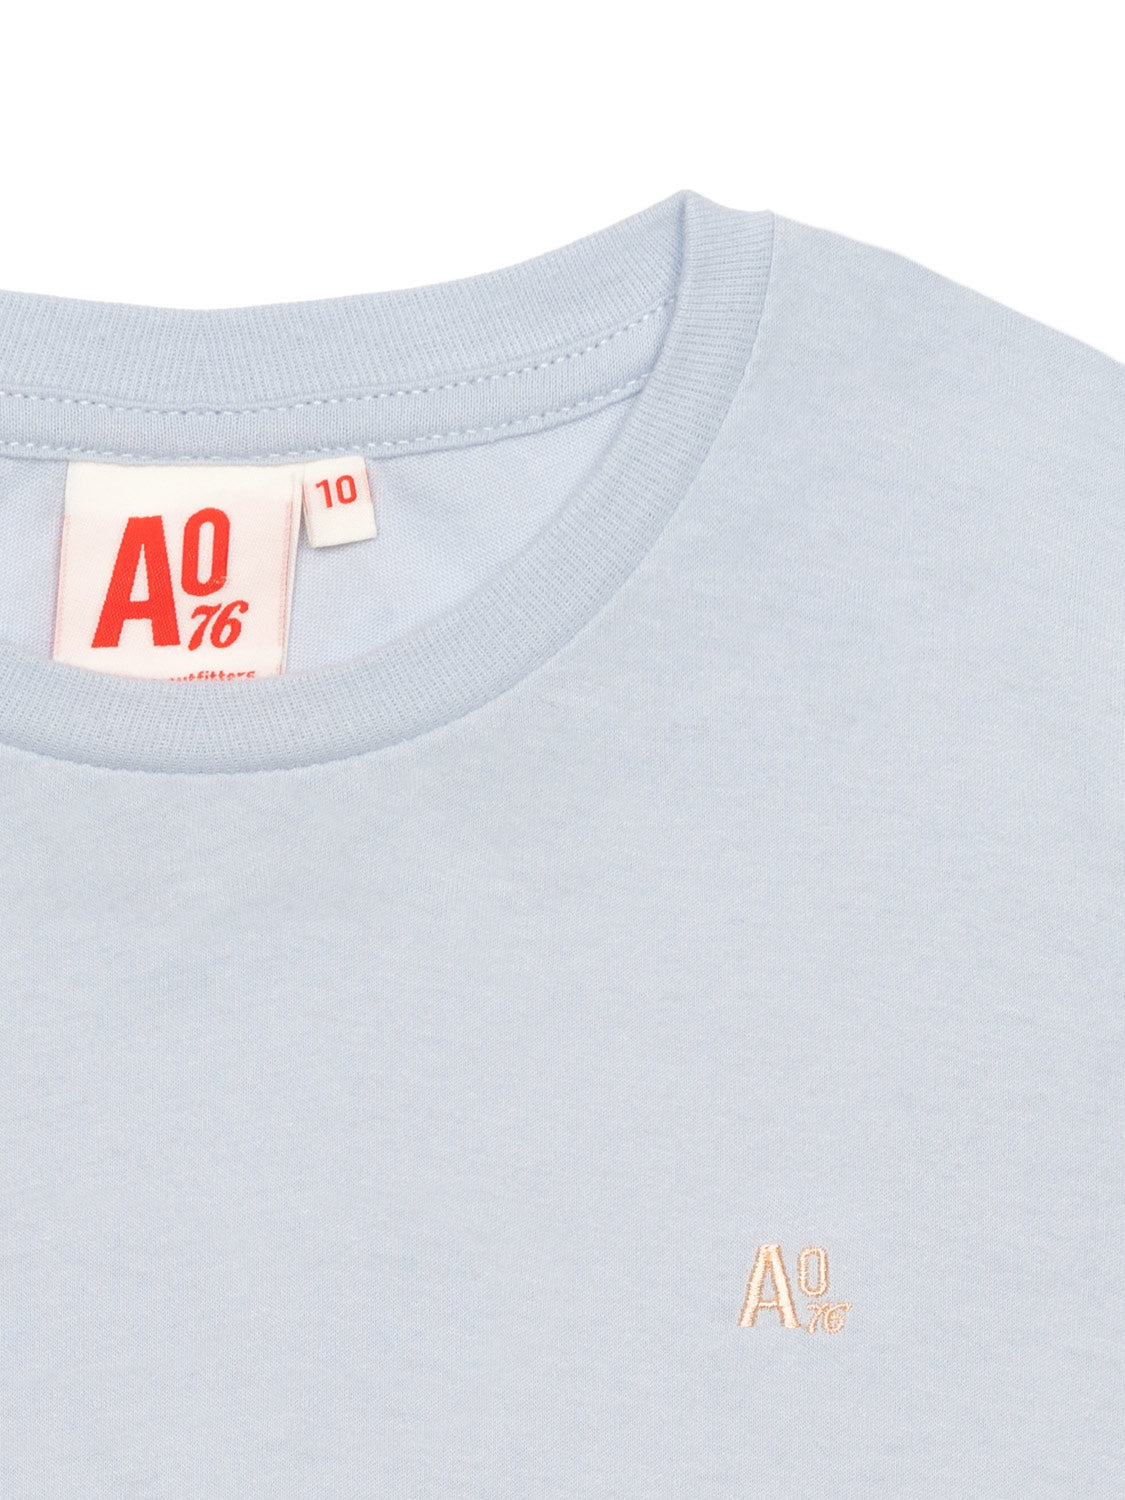 Amy T-Shirt AO76